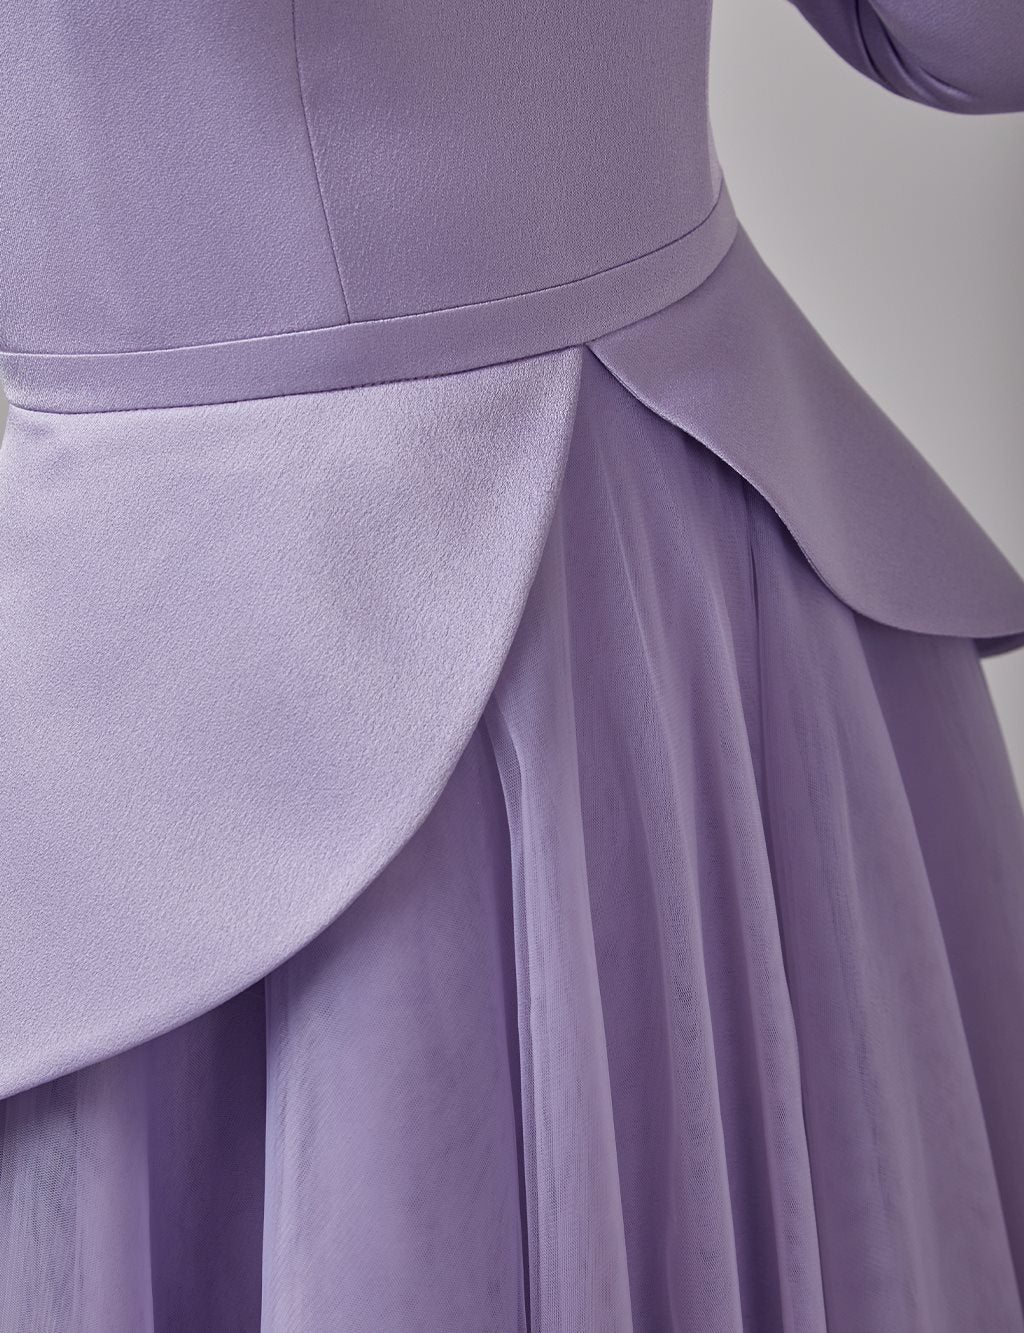 Tiara Tulle Skirt Evening Dress Purple